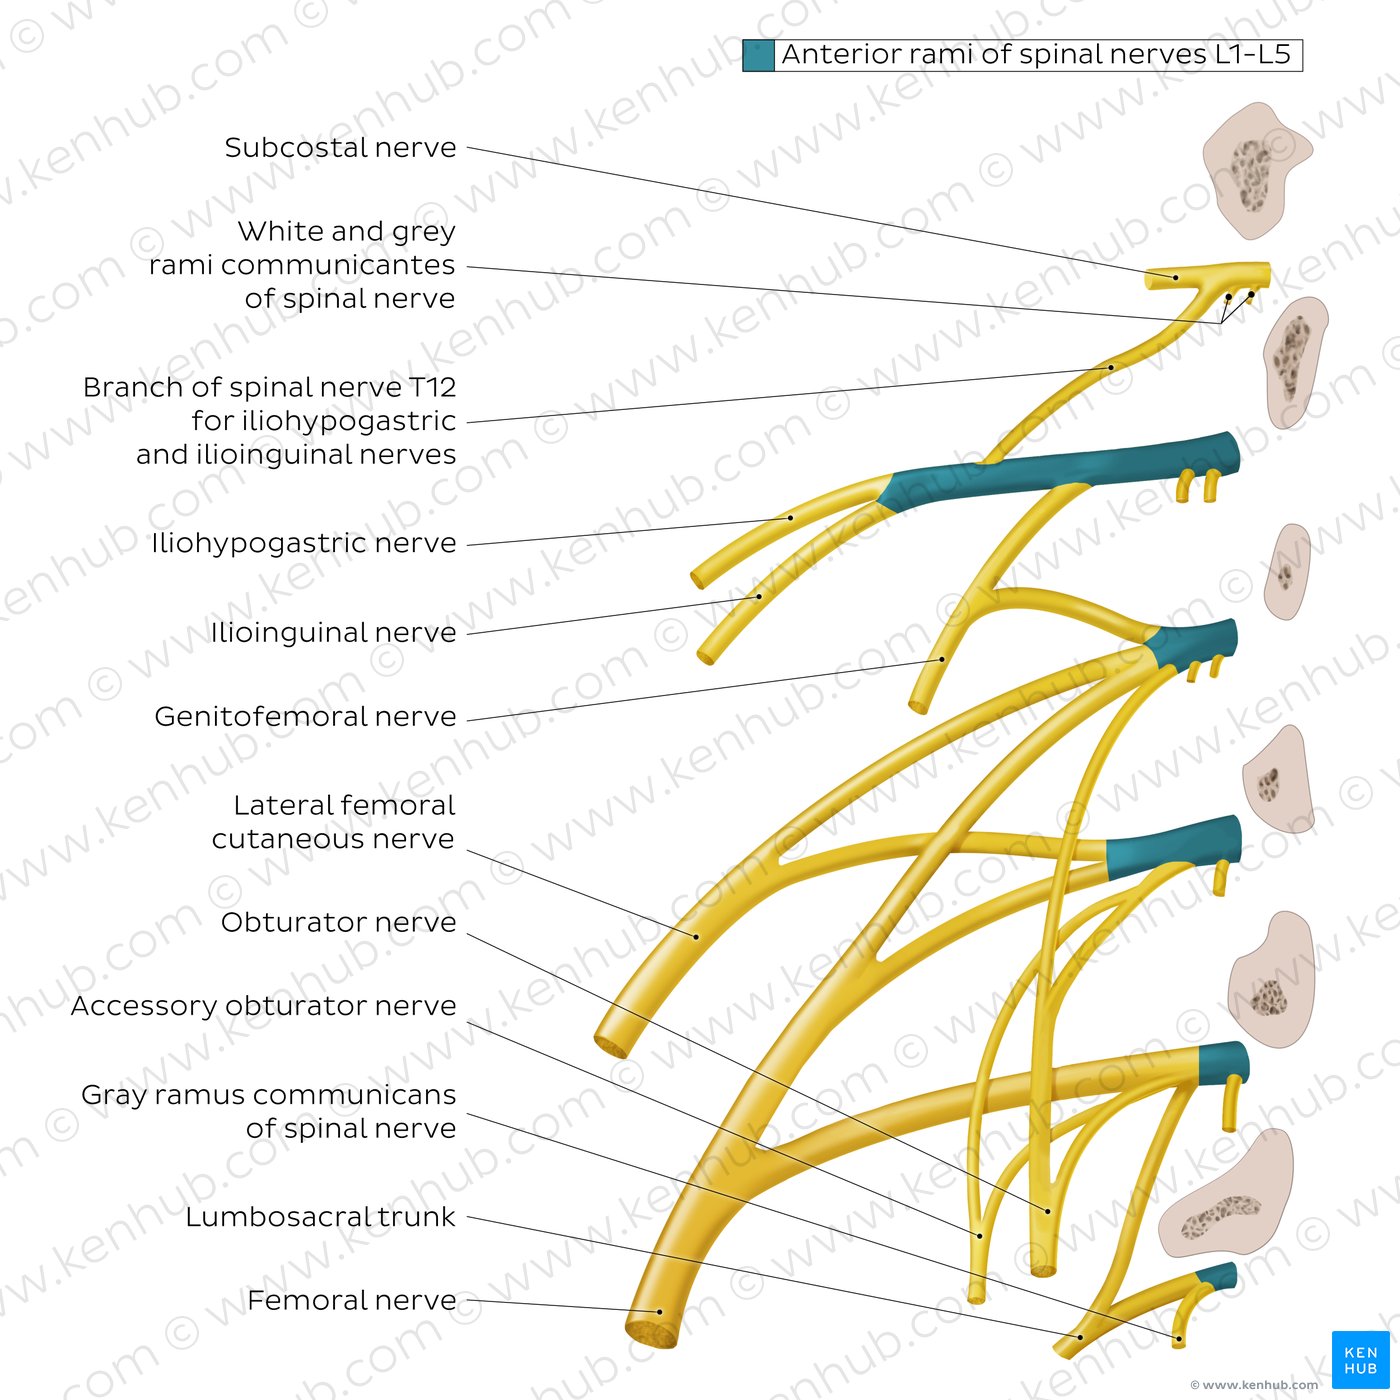 Anatomy of the lumbar plexus